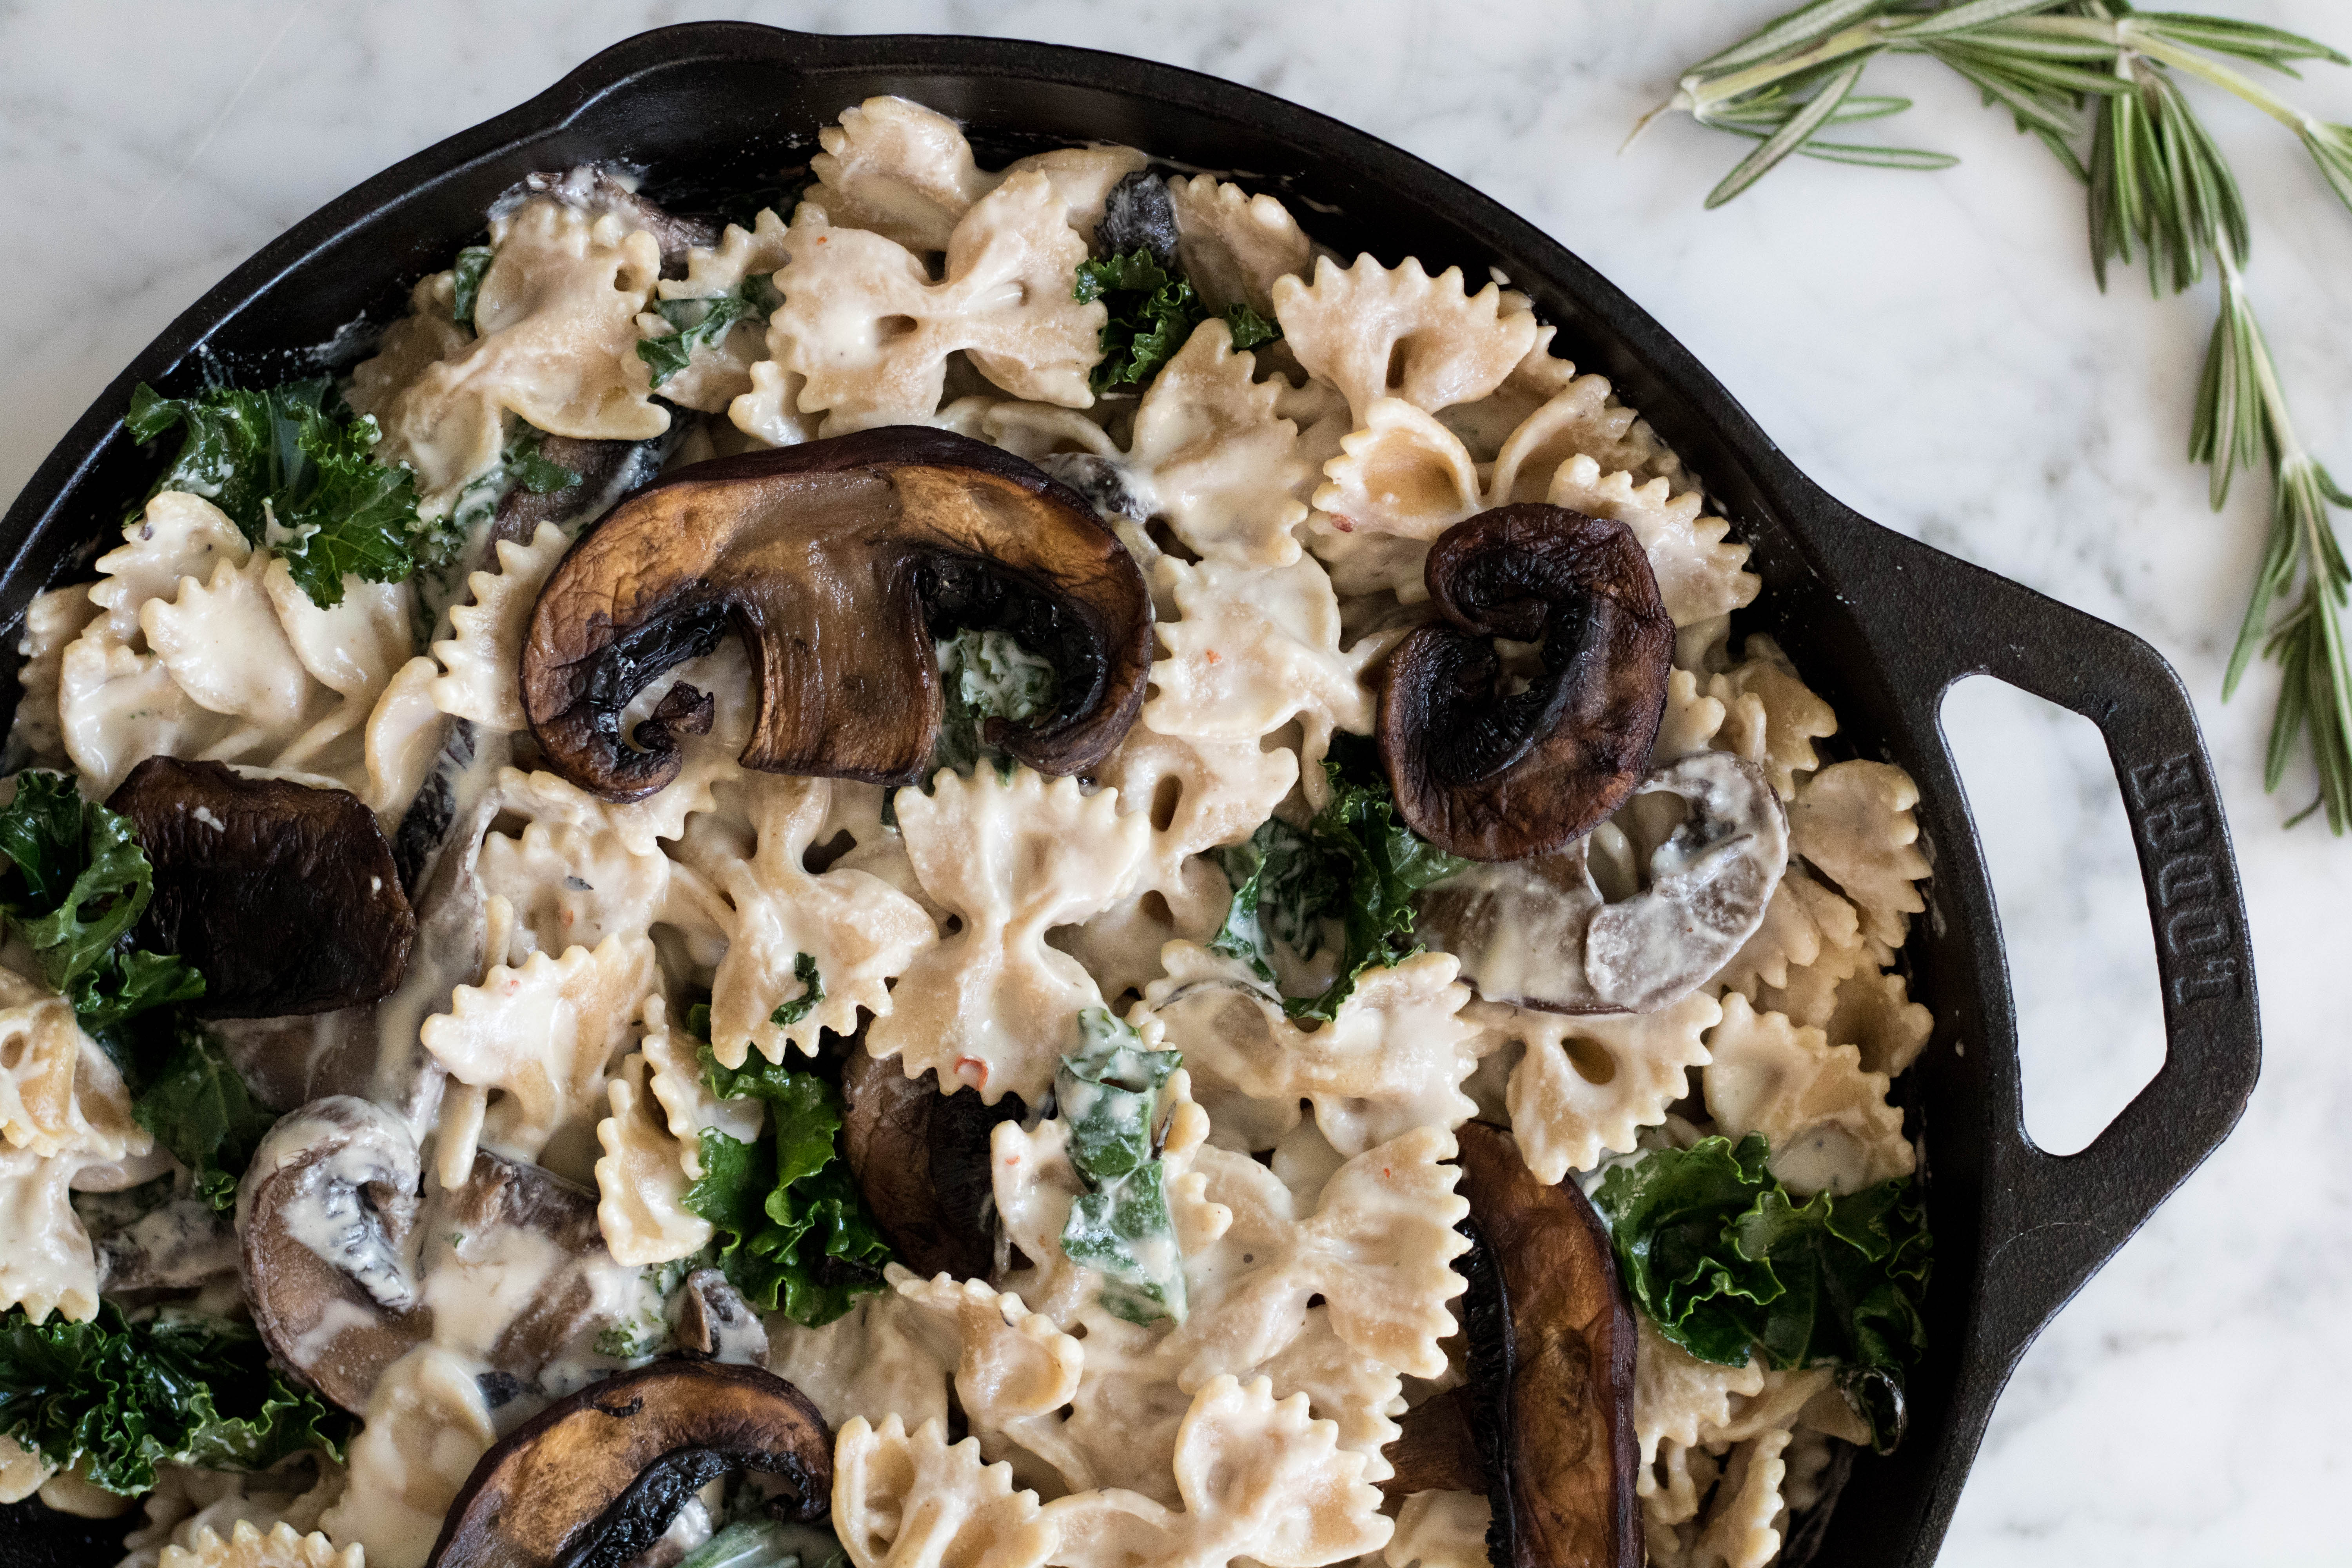 Vegan creamy Kale & mushroom pasta